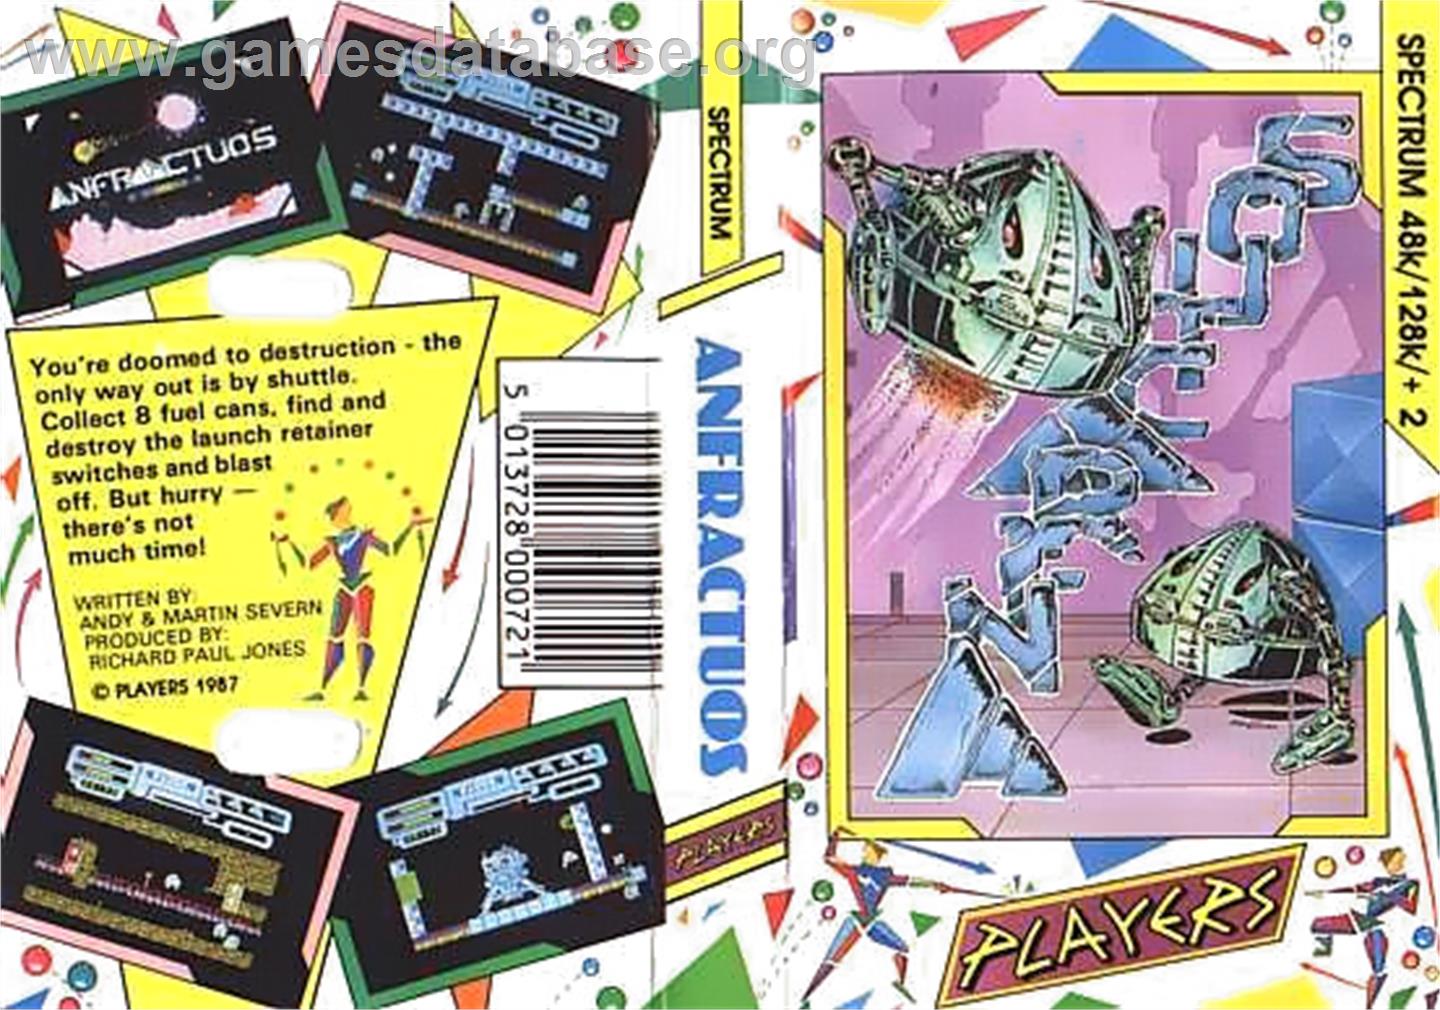 Anfractuos - Sinclair ZX Spectrum - Artwork - Box